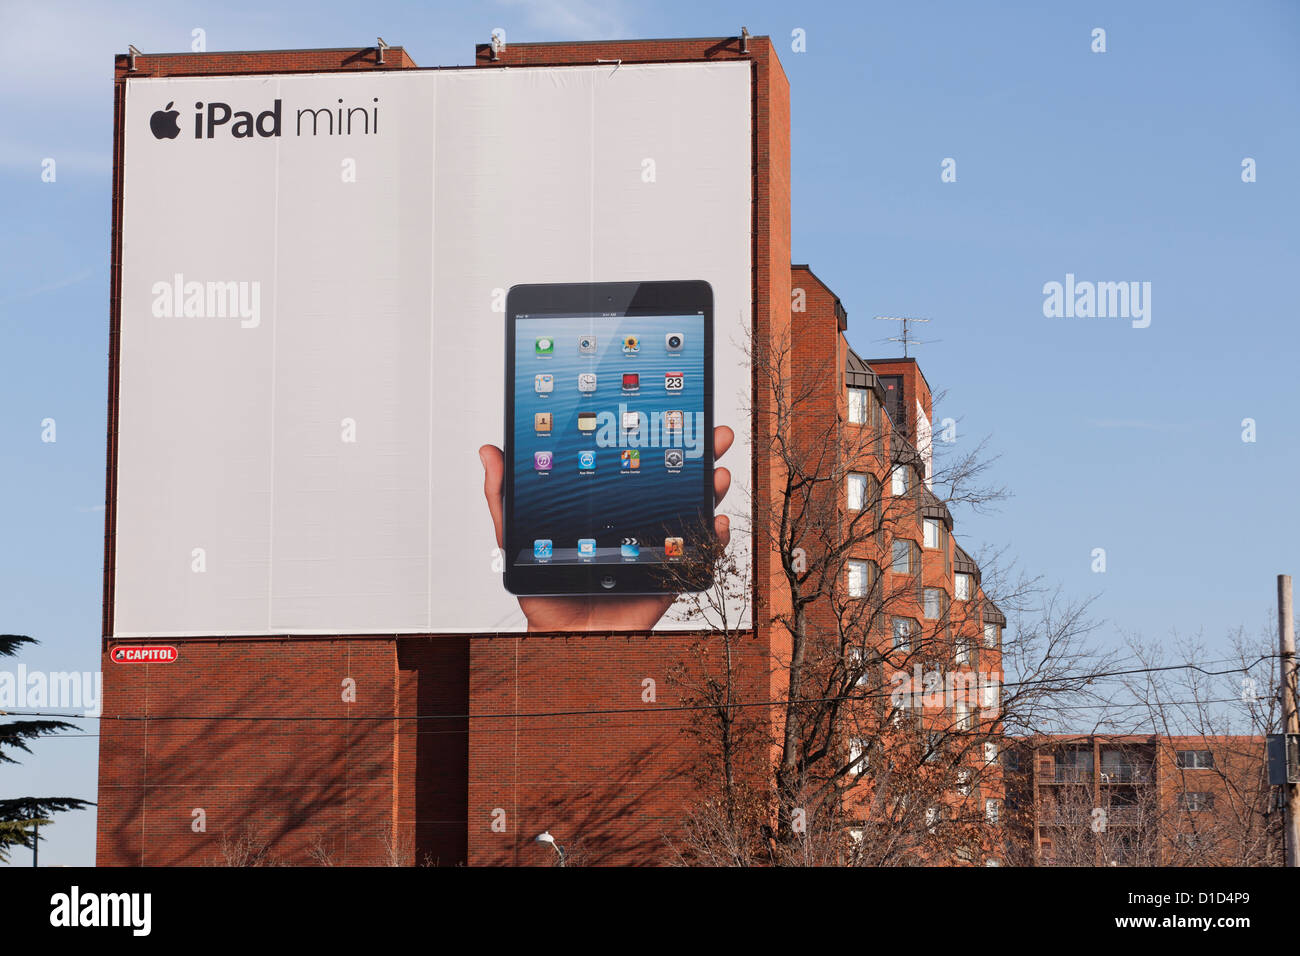 iPad mini ad on side of old brick building Stock Photo